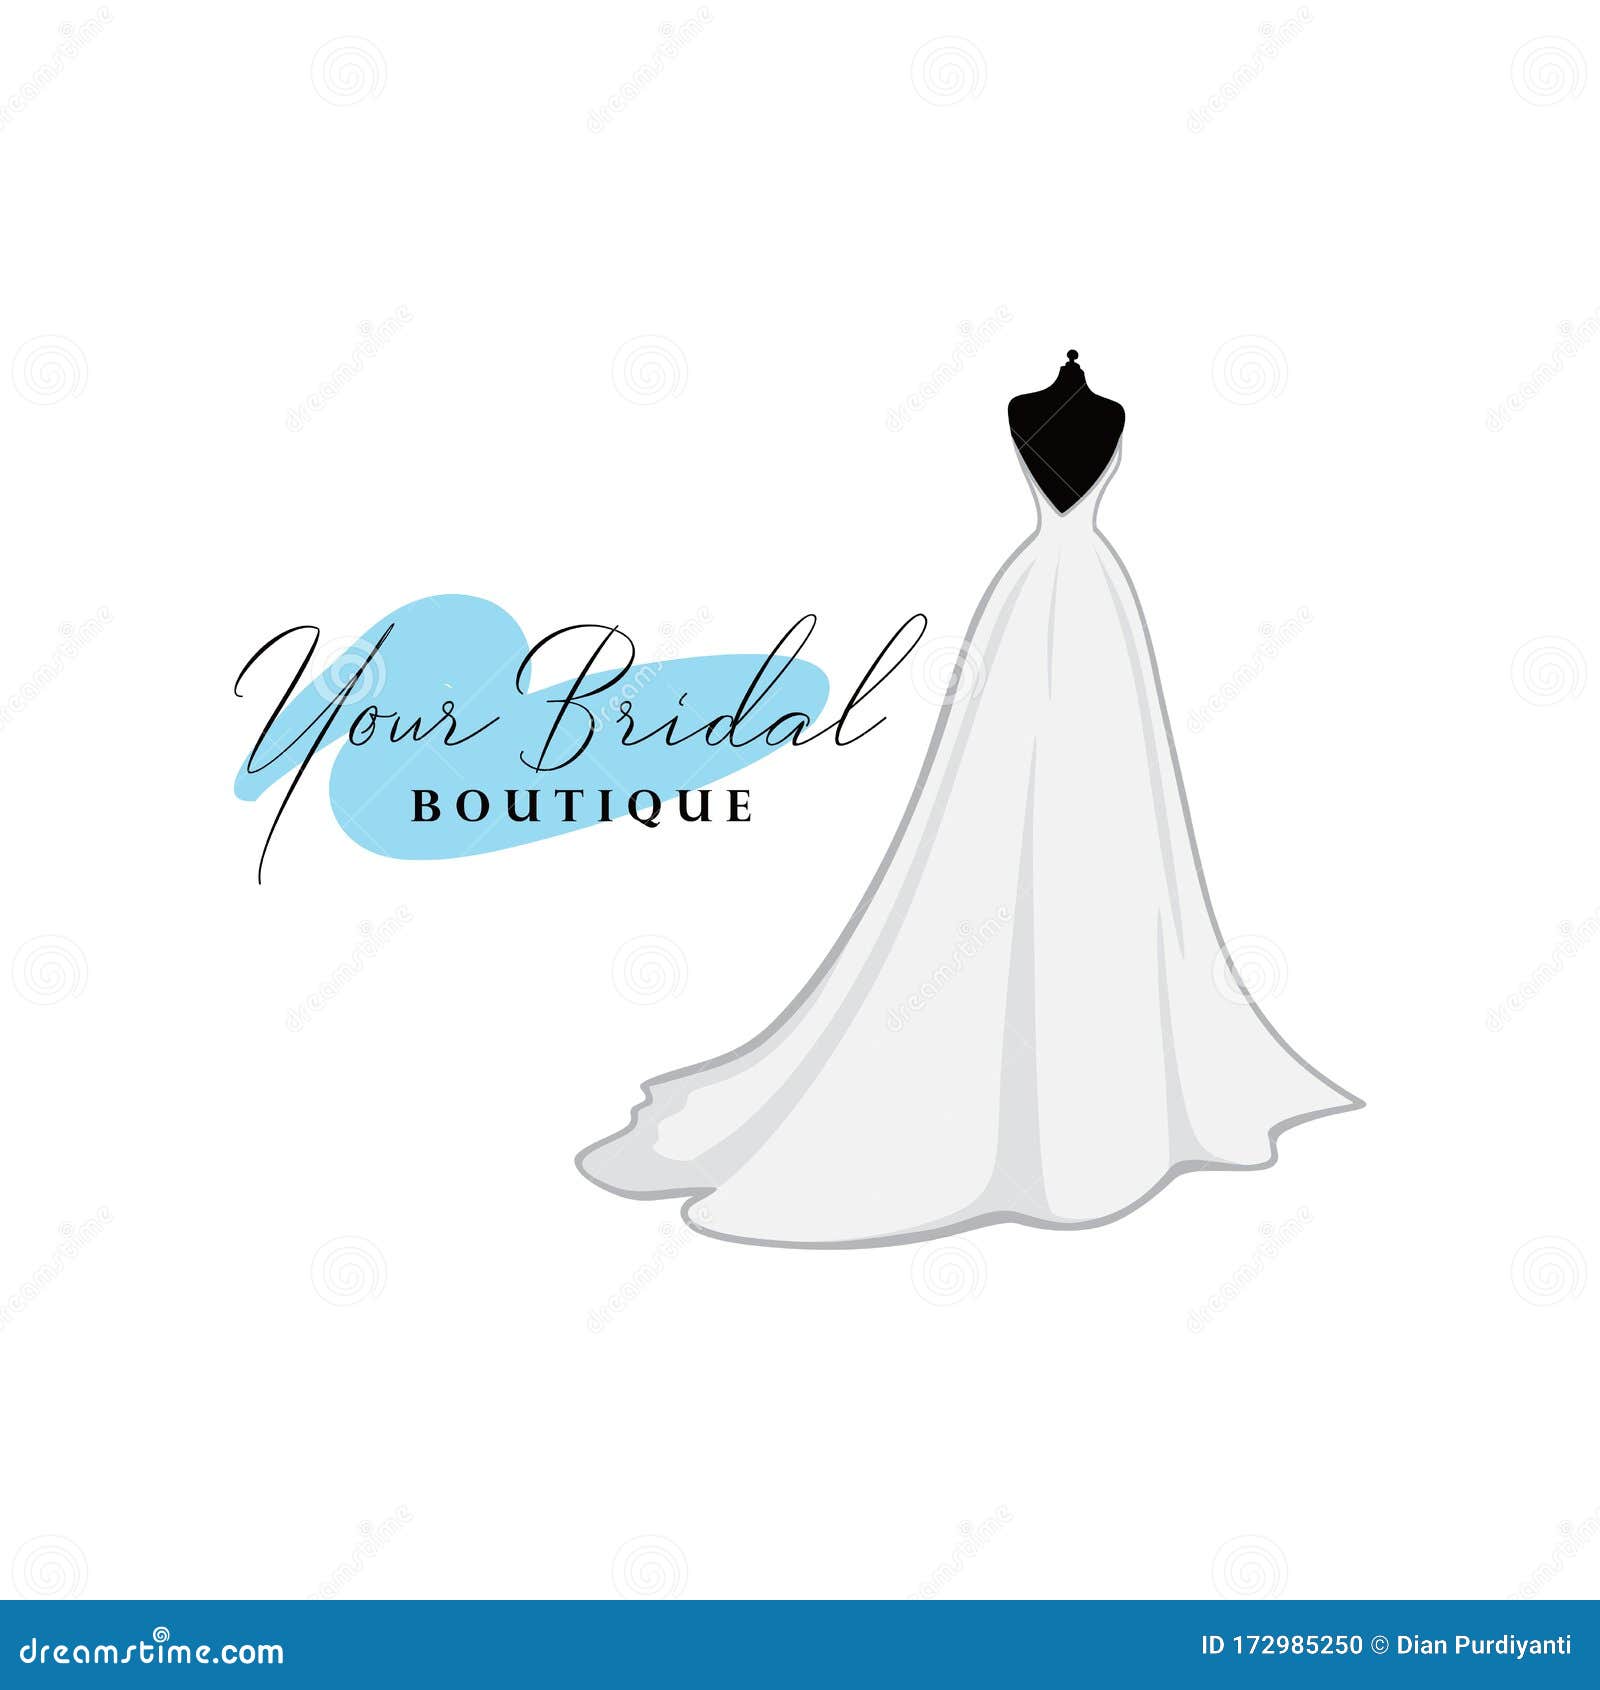 Monochrome Bridal Dress Boutique Logo Ideas Fashion Beautiful Bride Vector Design Stock Vector Illustration Of Business Fashion